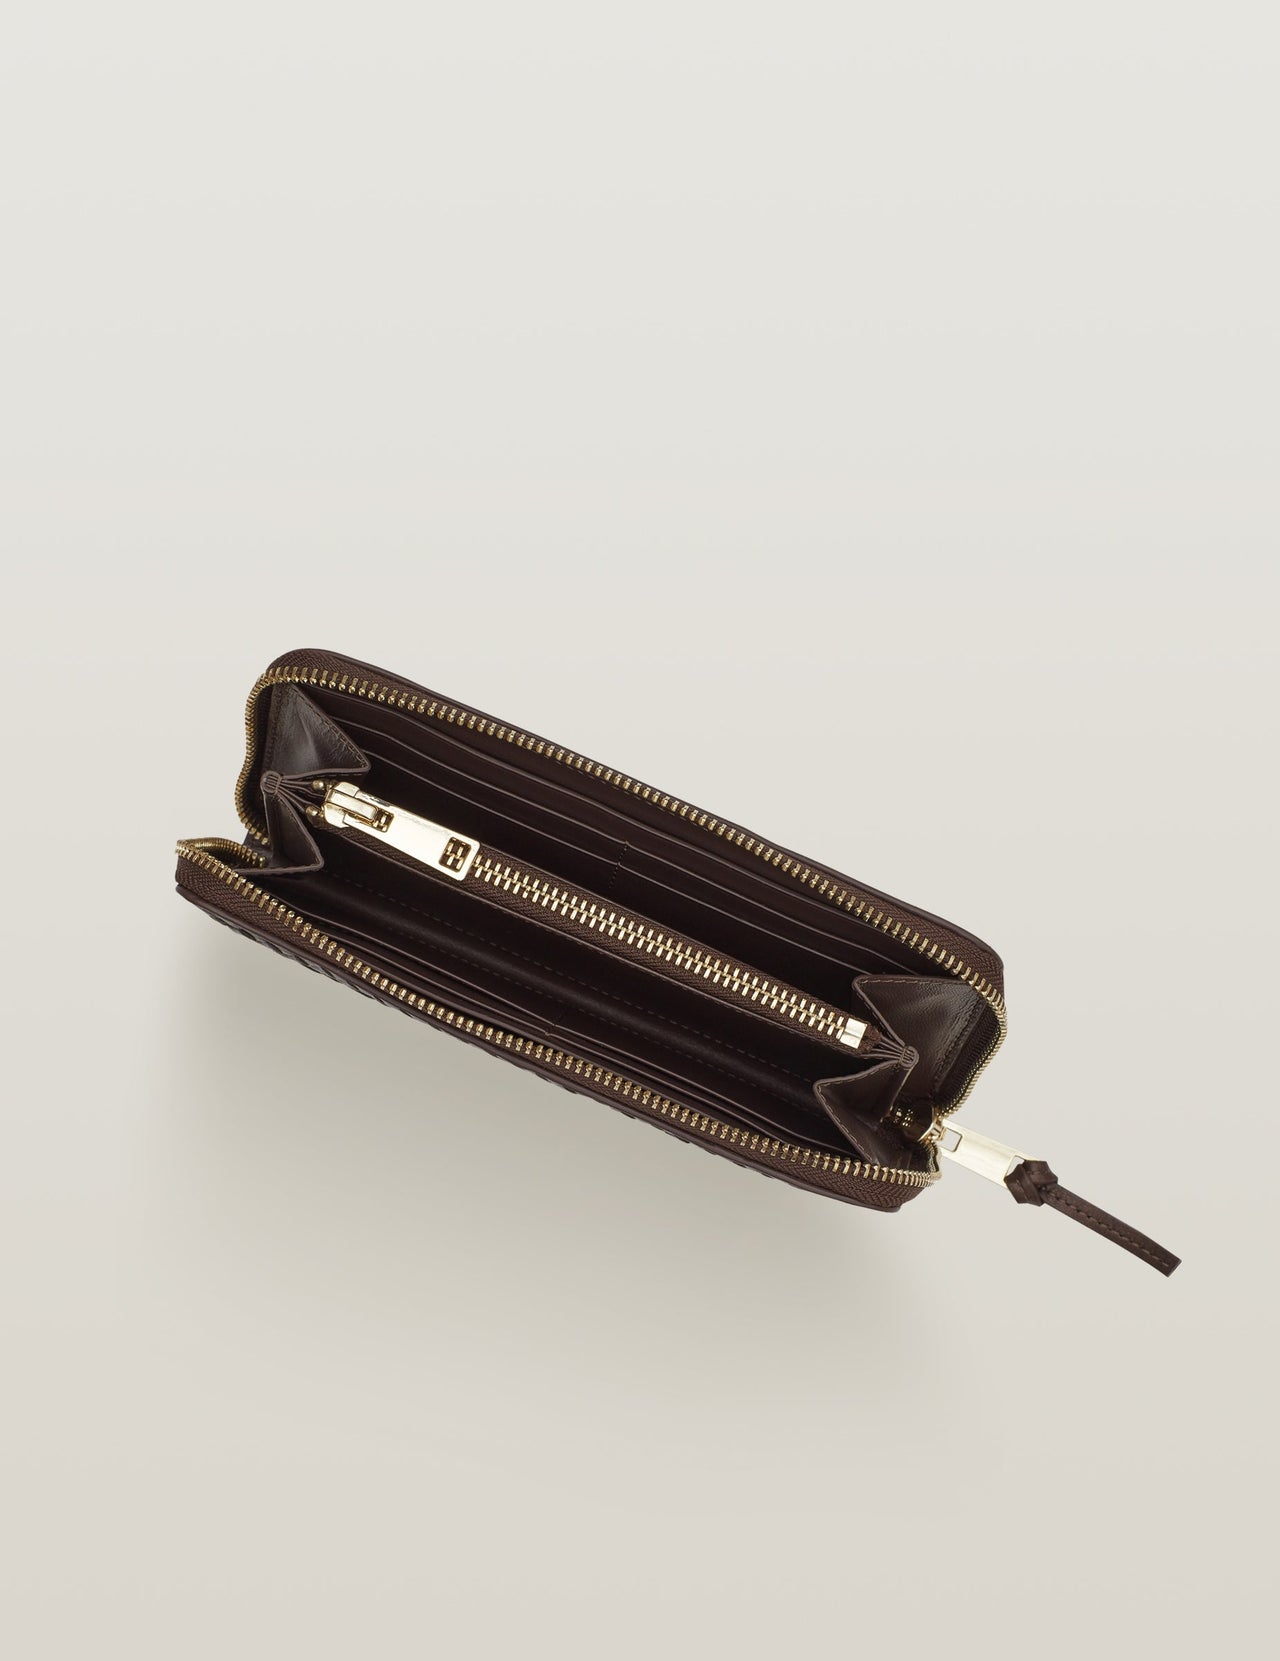  Metallic Brown Handwoven Large Leather Wallet 